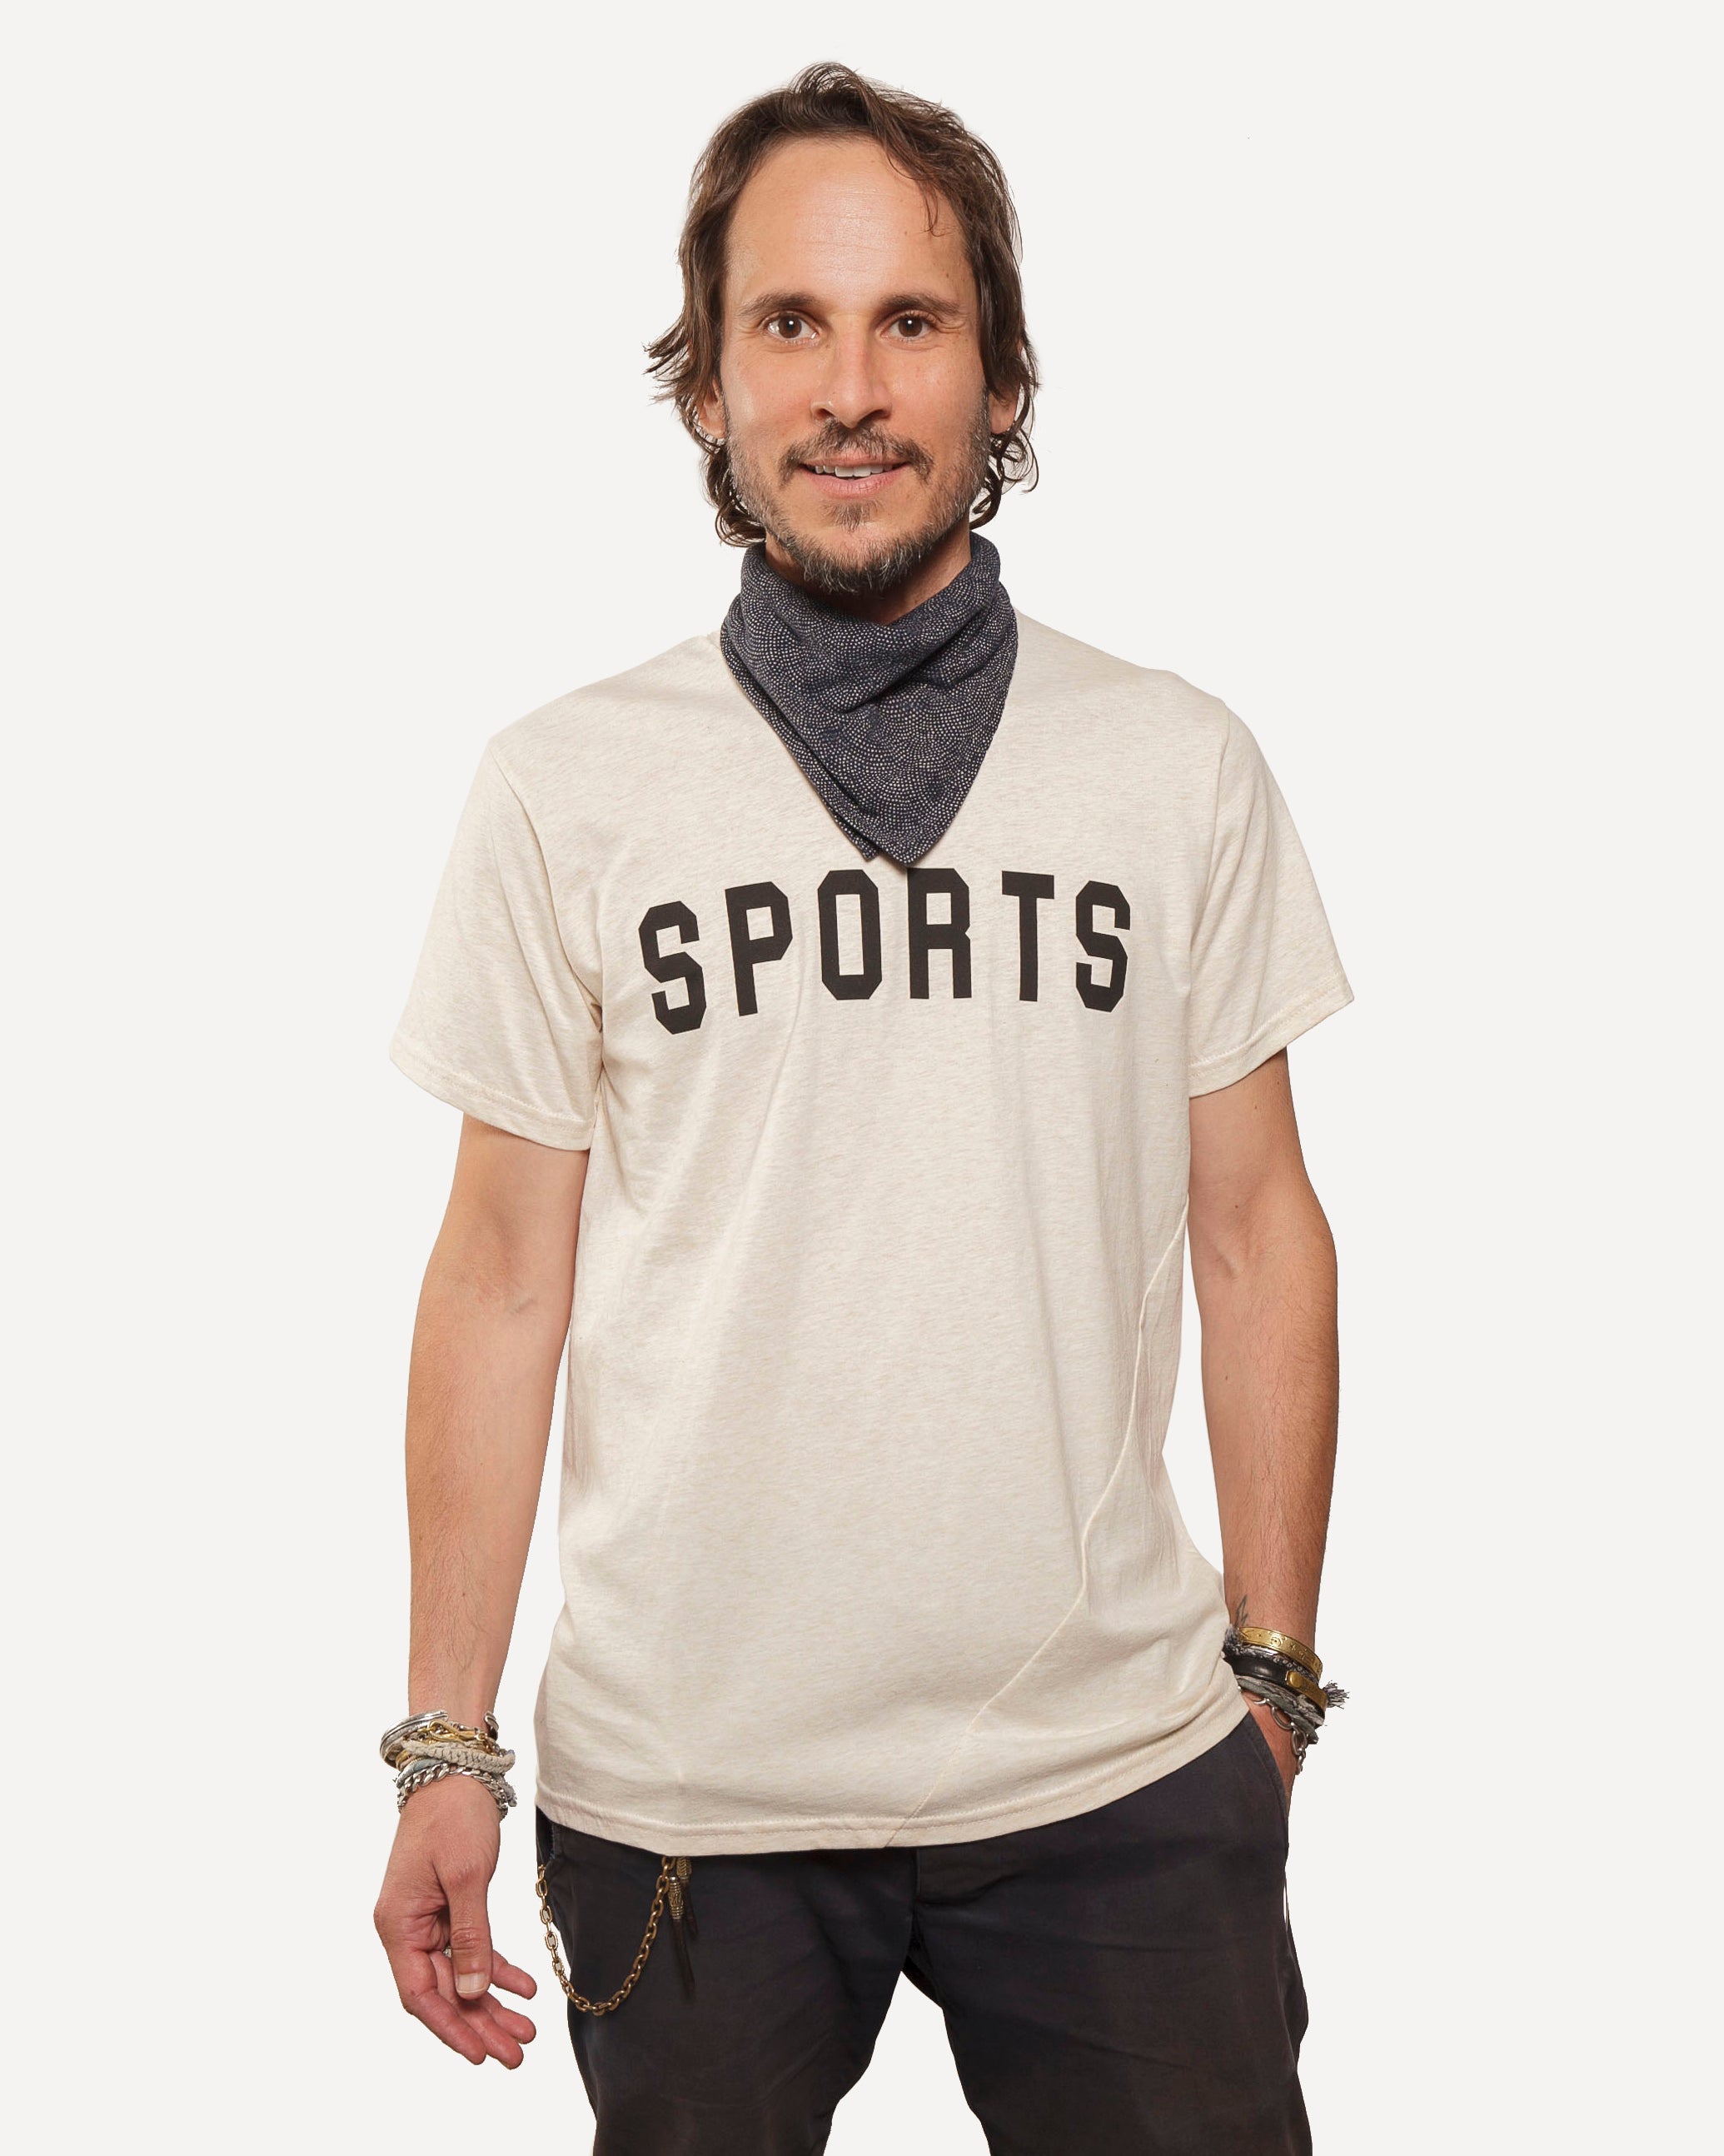 Graphic T-Shirt | Sports | Heather Almond